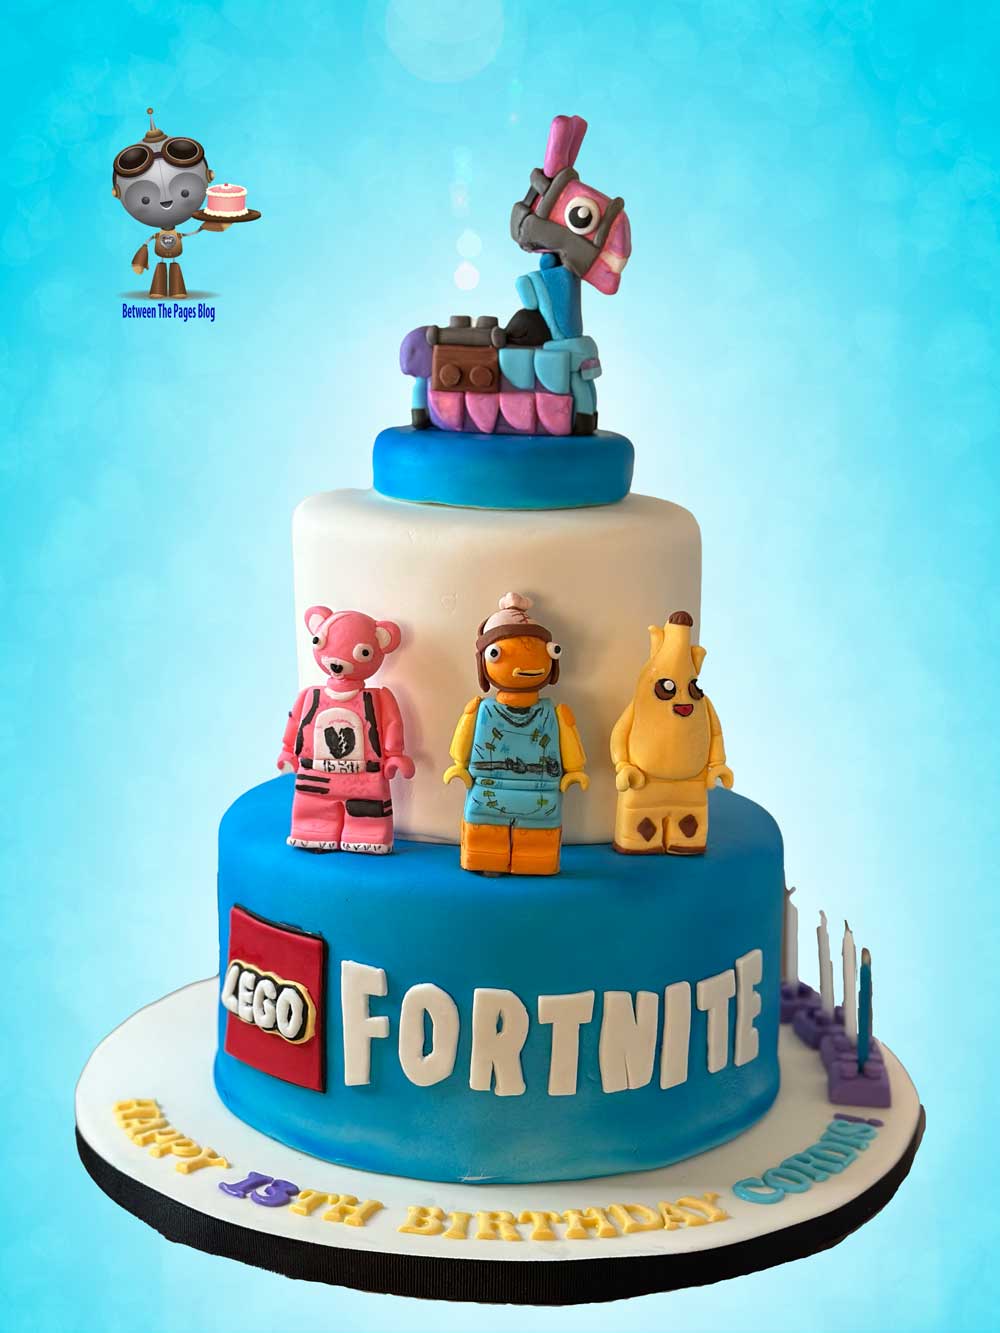 LEGO Fortnite Cake